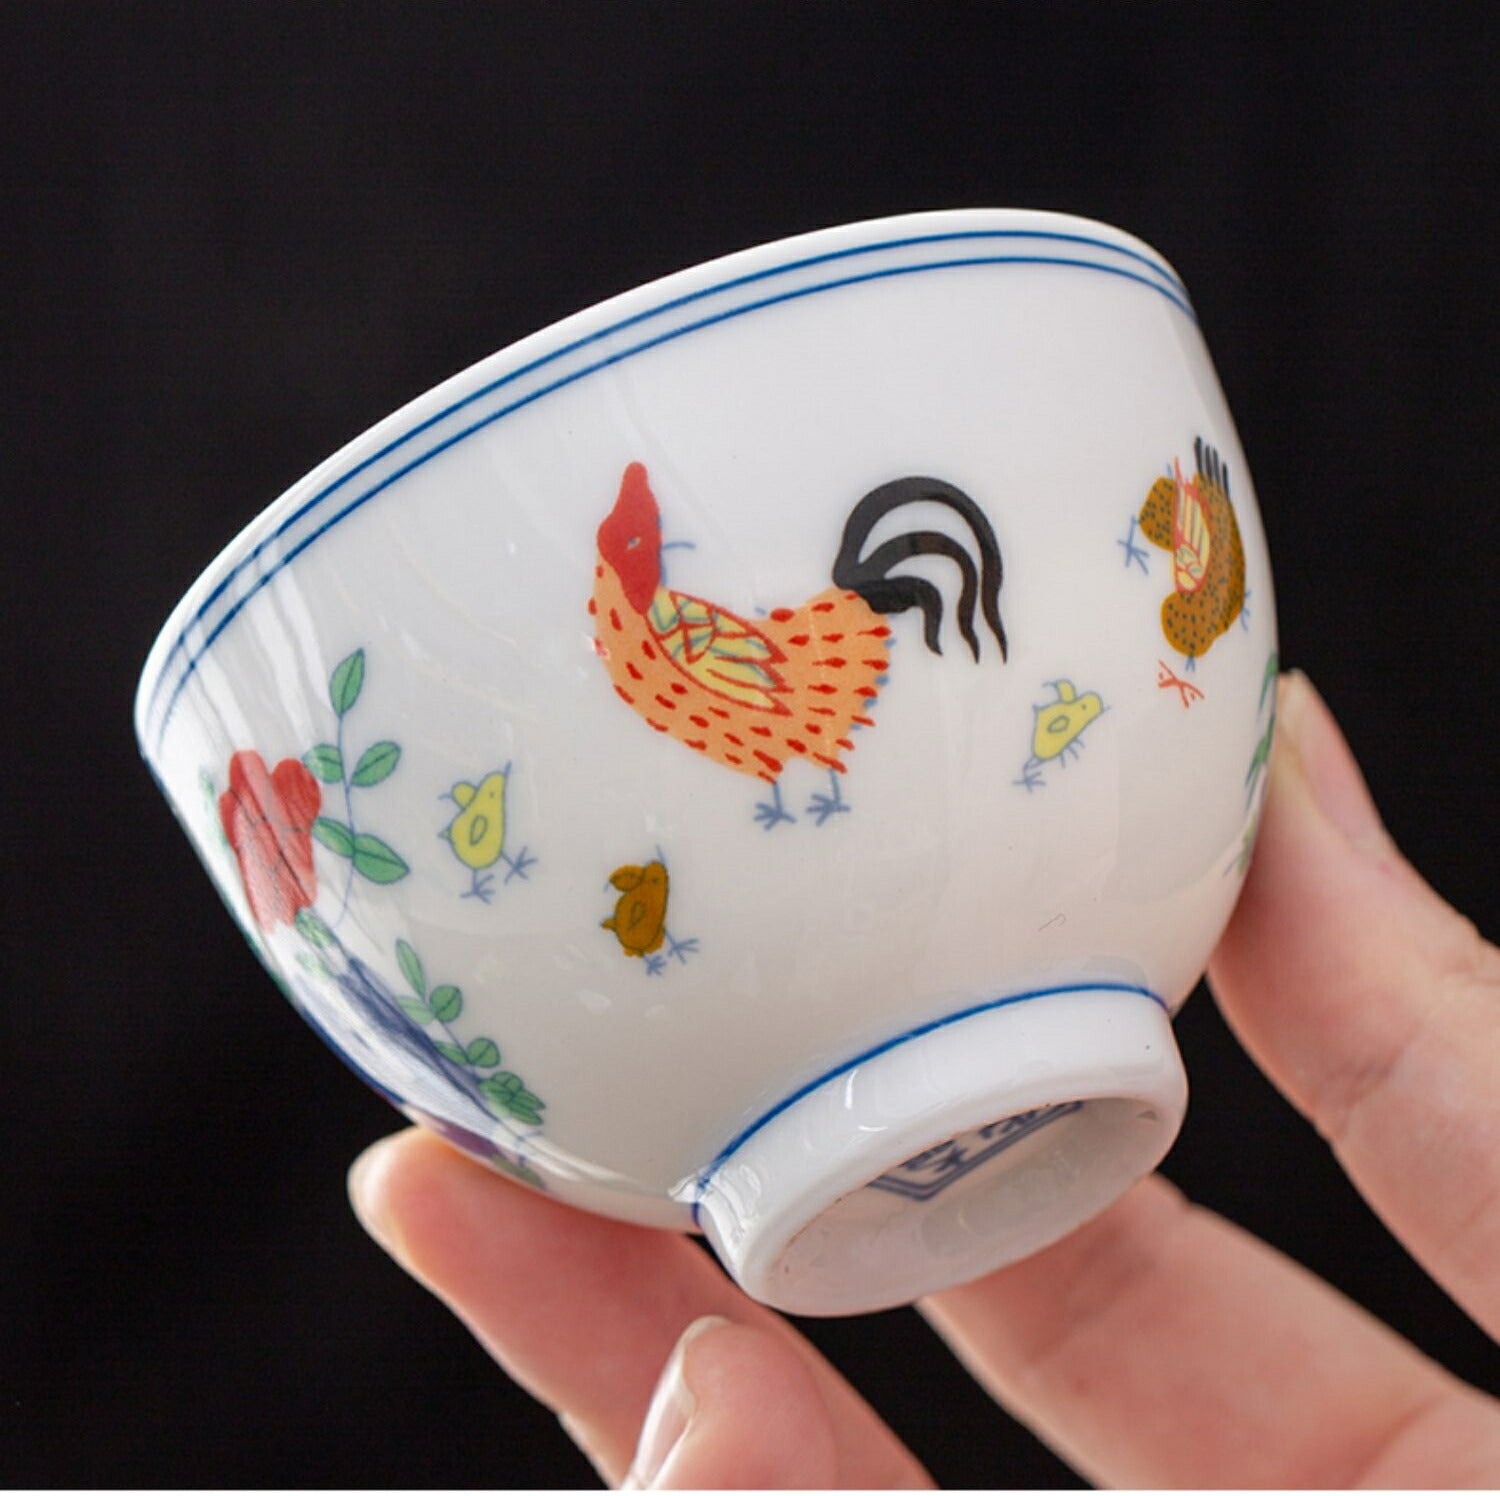 IwaiLoft 鶏 2客 茶器セット 宝瓶 蓋碗 ガラス サーバー 湯冷まし 品茗杯 茶杯 湯吞み 小 白磁 茶器 磁器 ホワイト 白い食 –  茶器・コーヒー用品を選ぶ - IwaiLoft